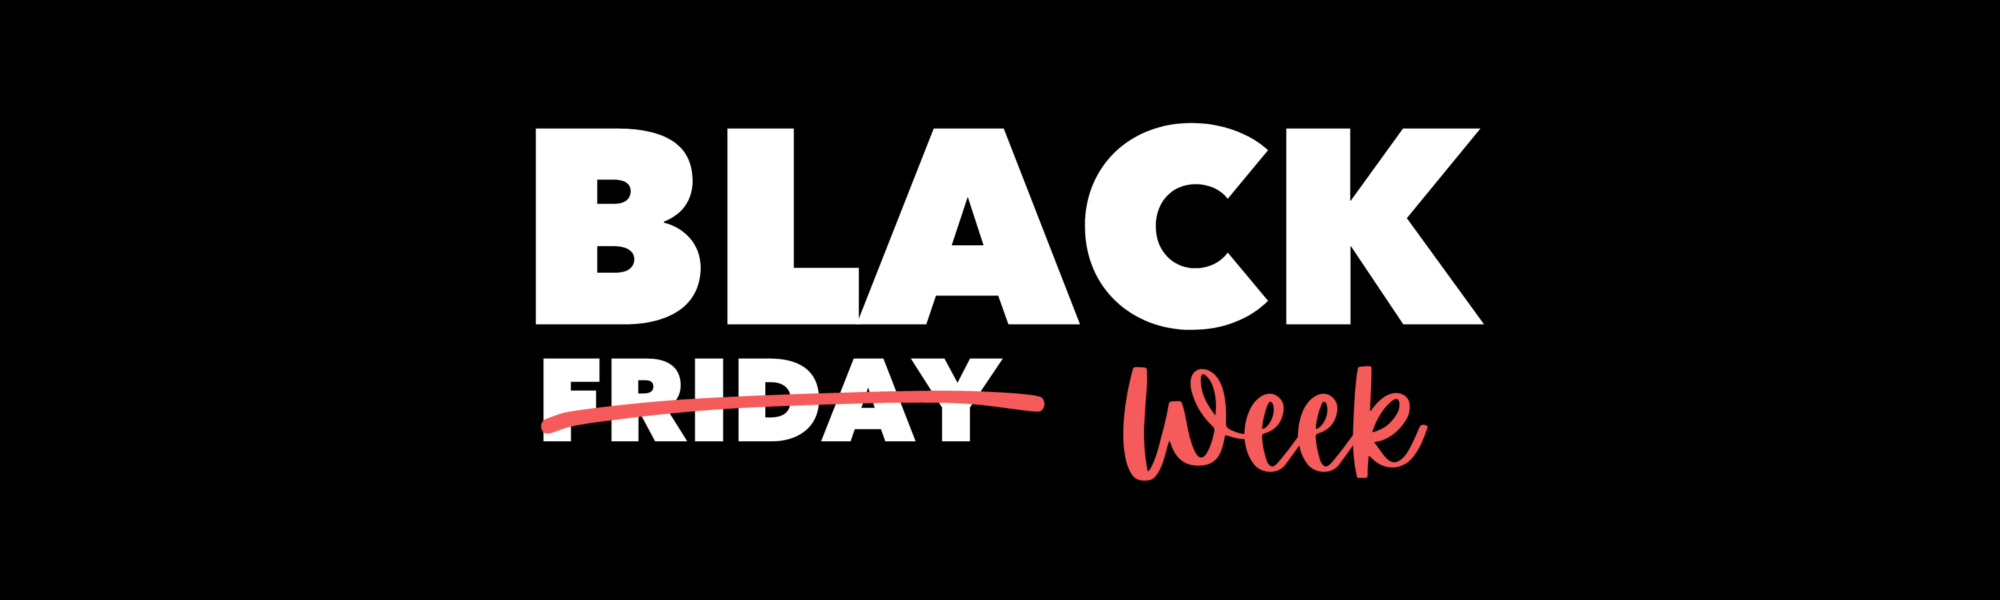 Xplora black friday on black week